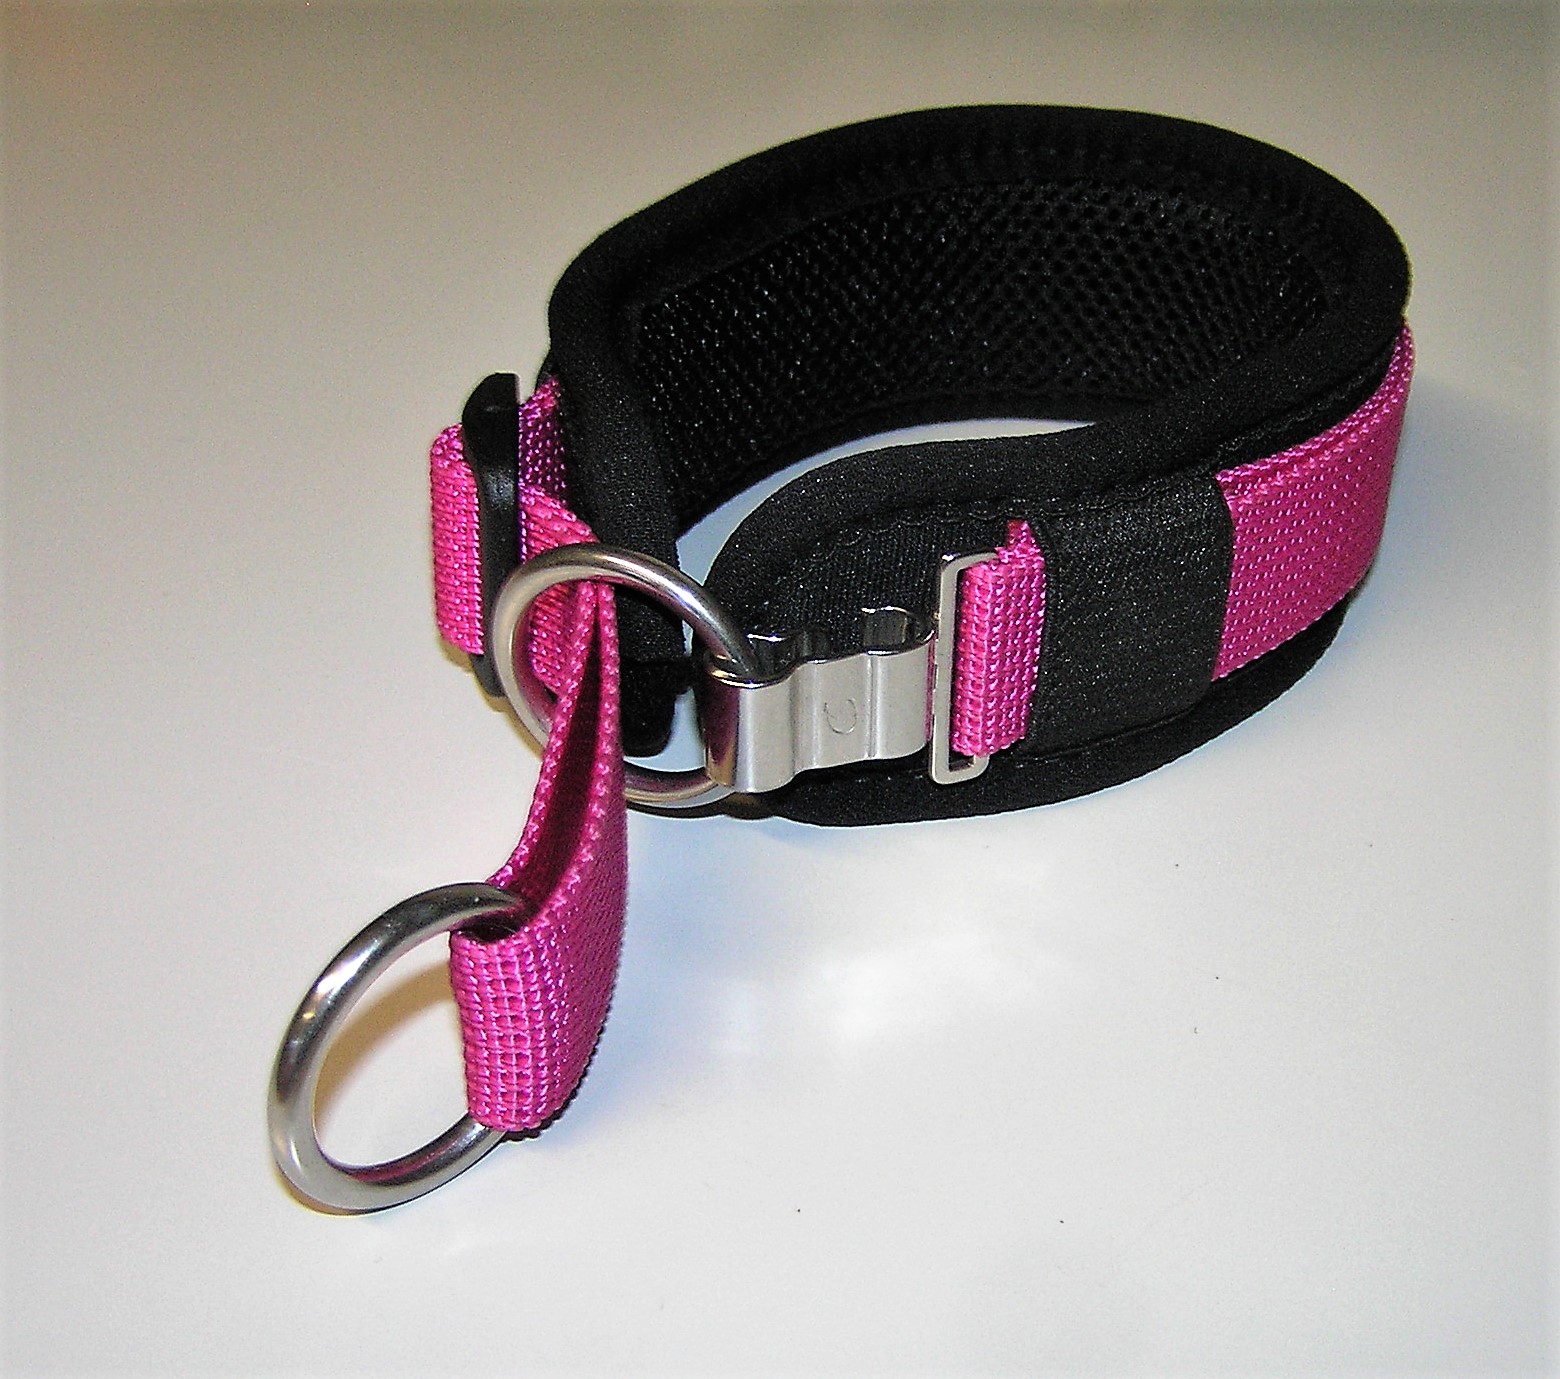 CS- Zugstopp-Halsband, gepolstert / gepolstertes Hundehalsband mit  variablem Zug-Stopp